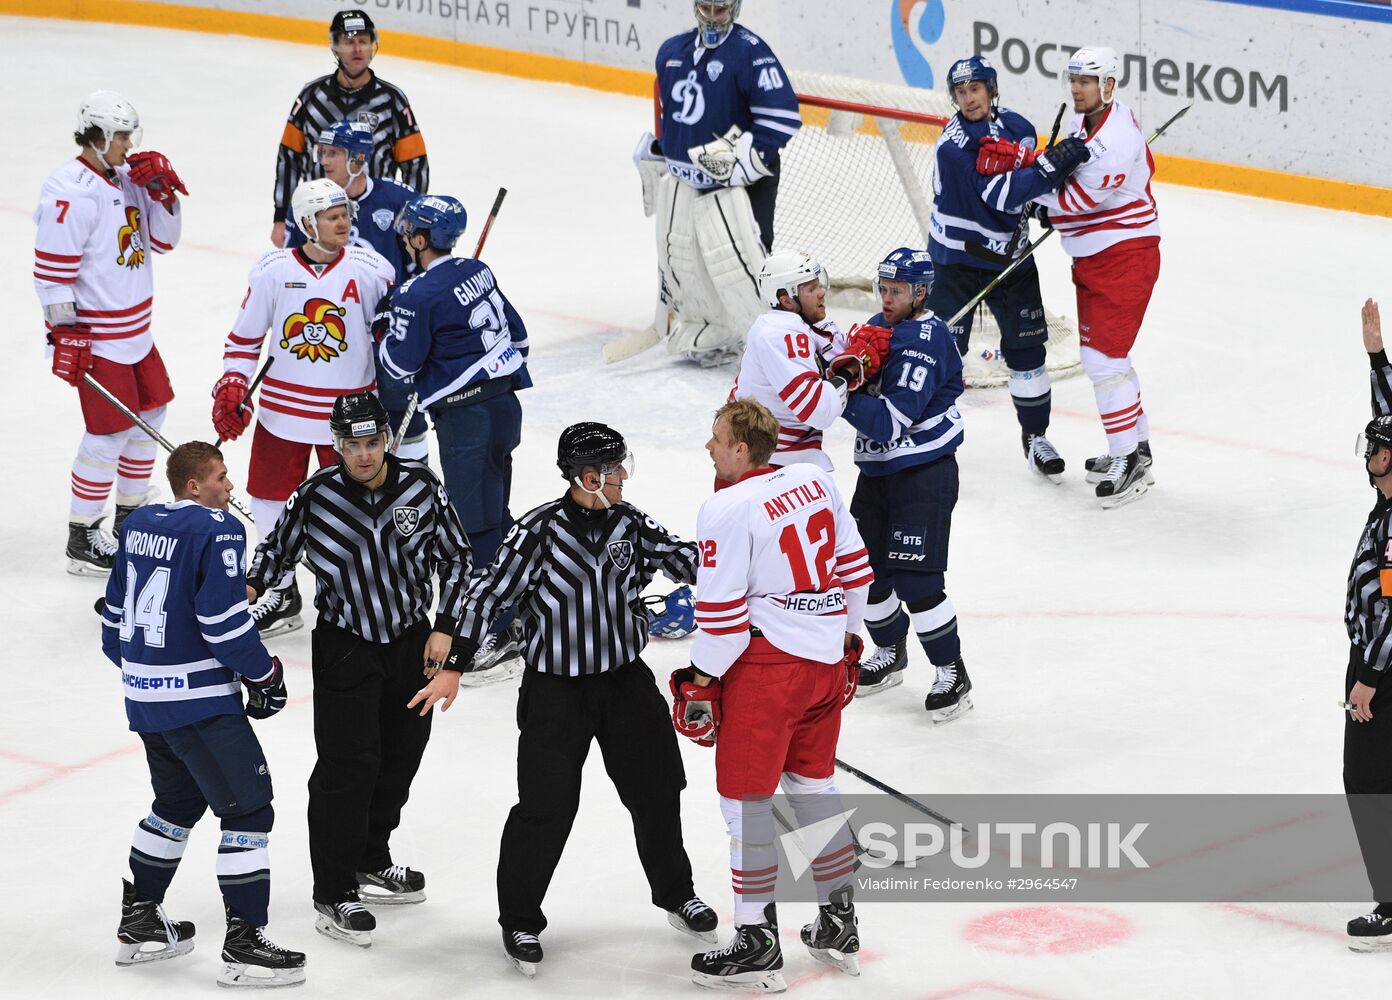 Kontinental Hockey League. Dynamo Moscow vs. Jokerit